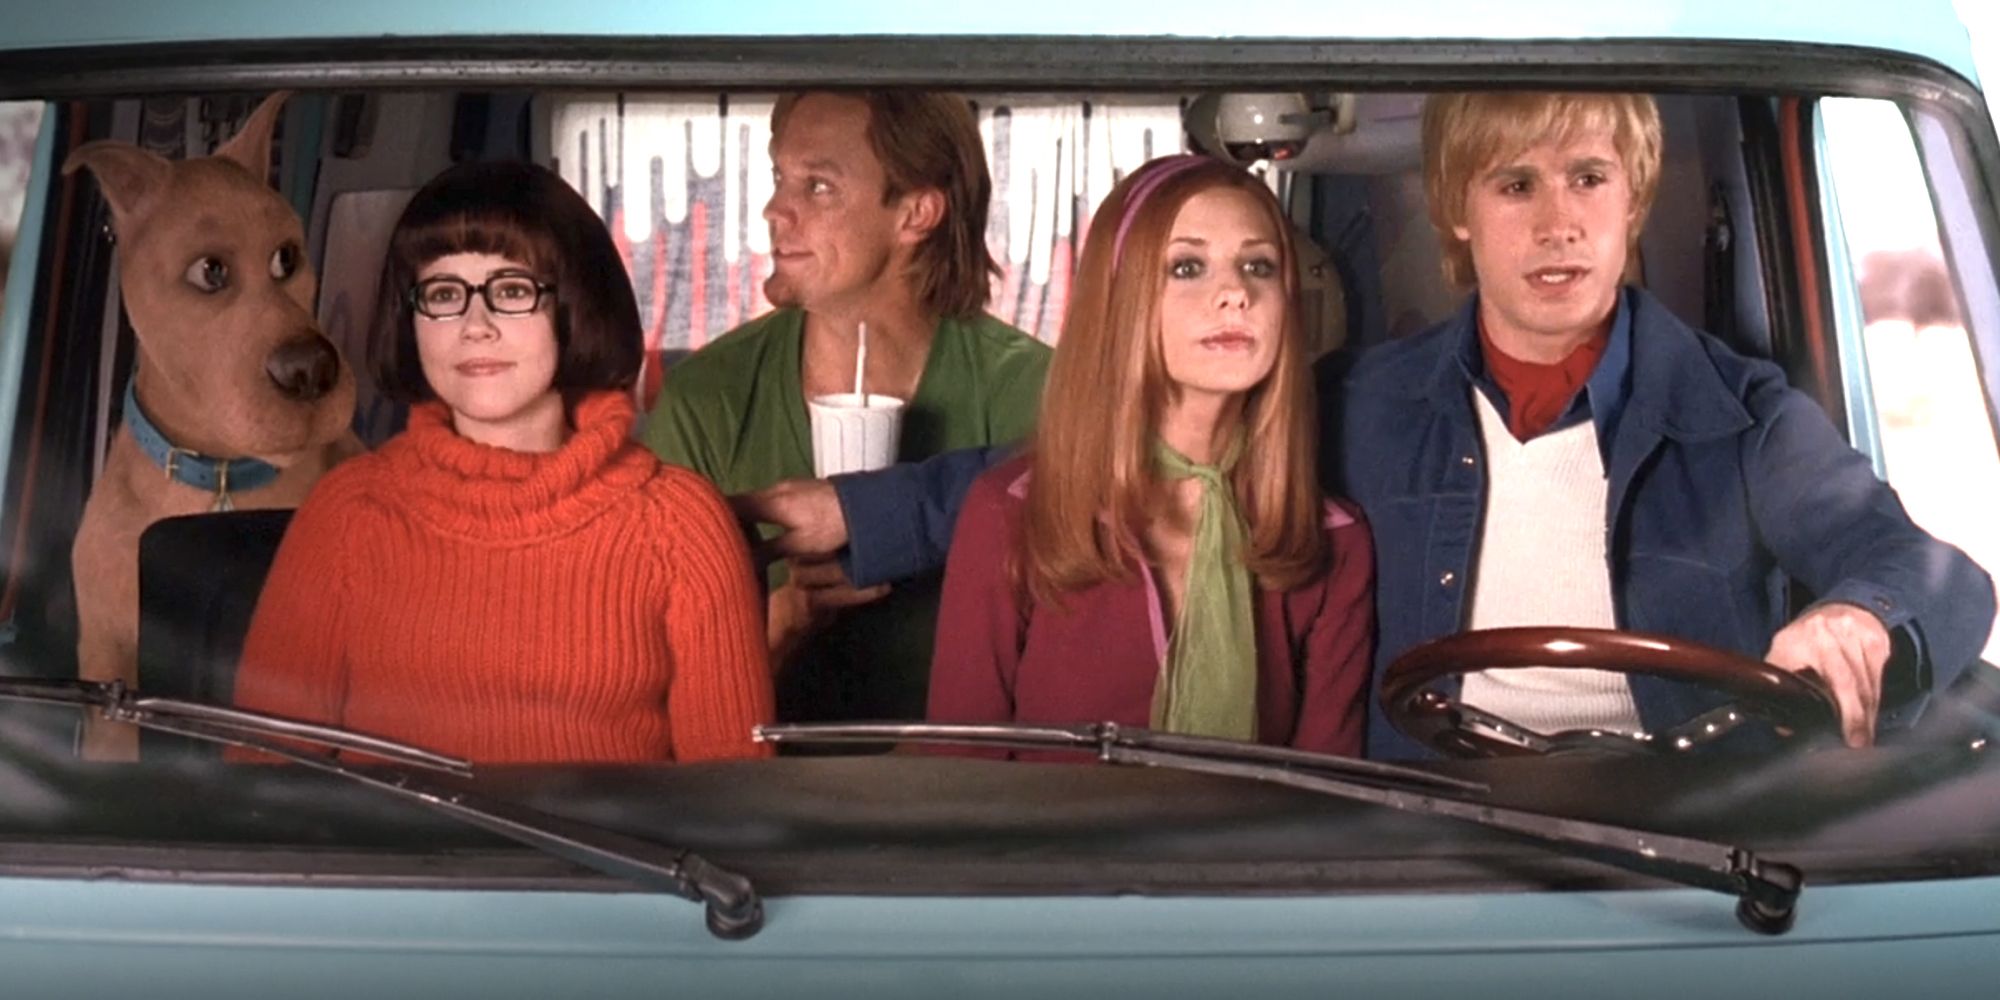 The live action Scooby Doo cast in the van